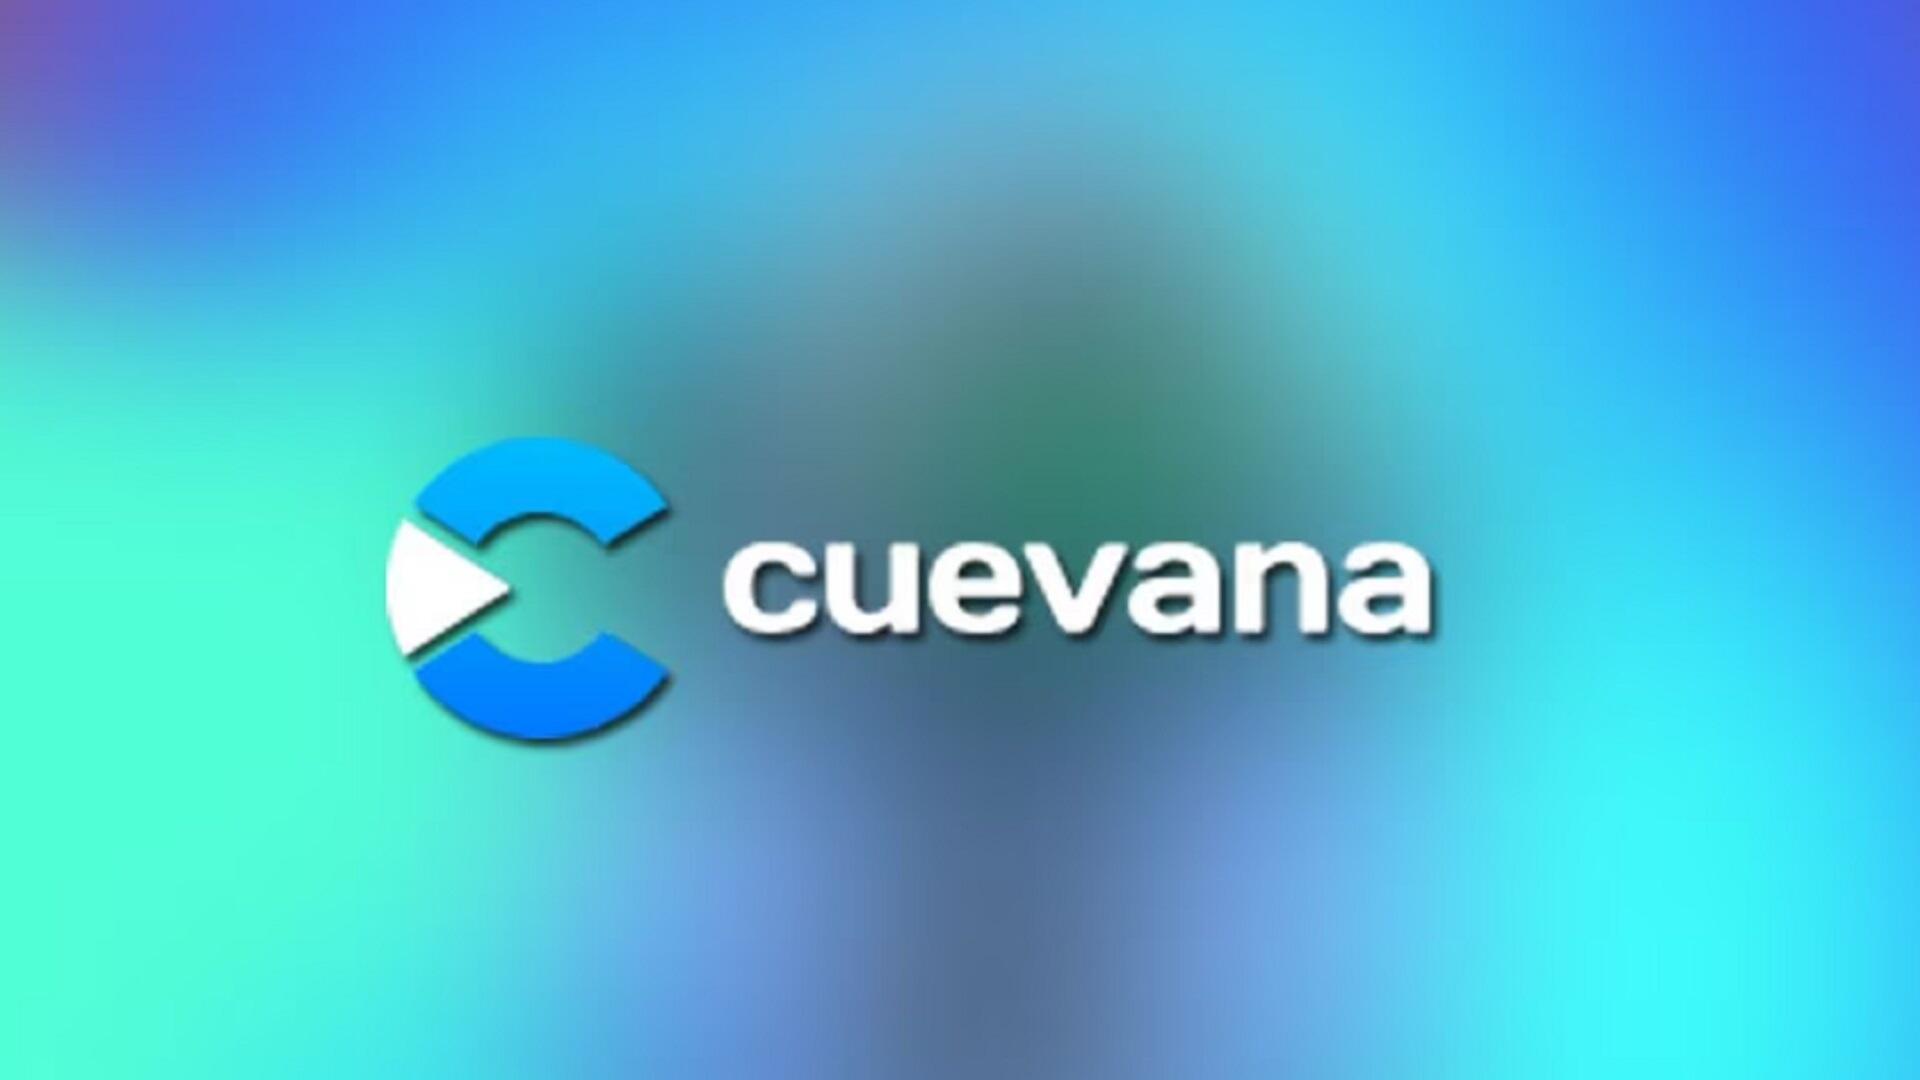 Cuevana Movil 5 APK - com.movsec.cuevana APK Download